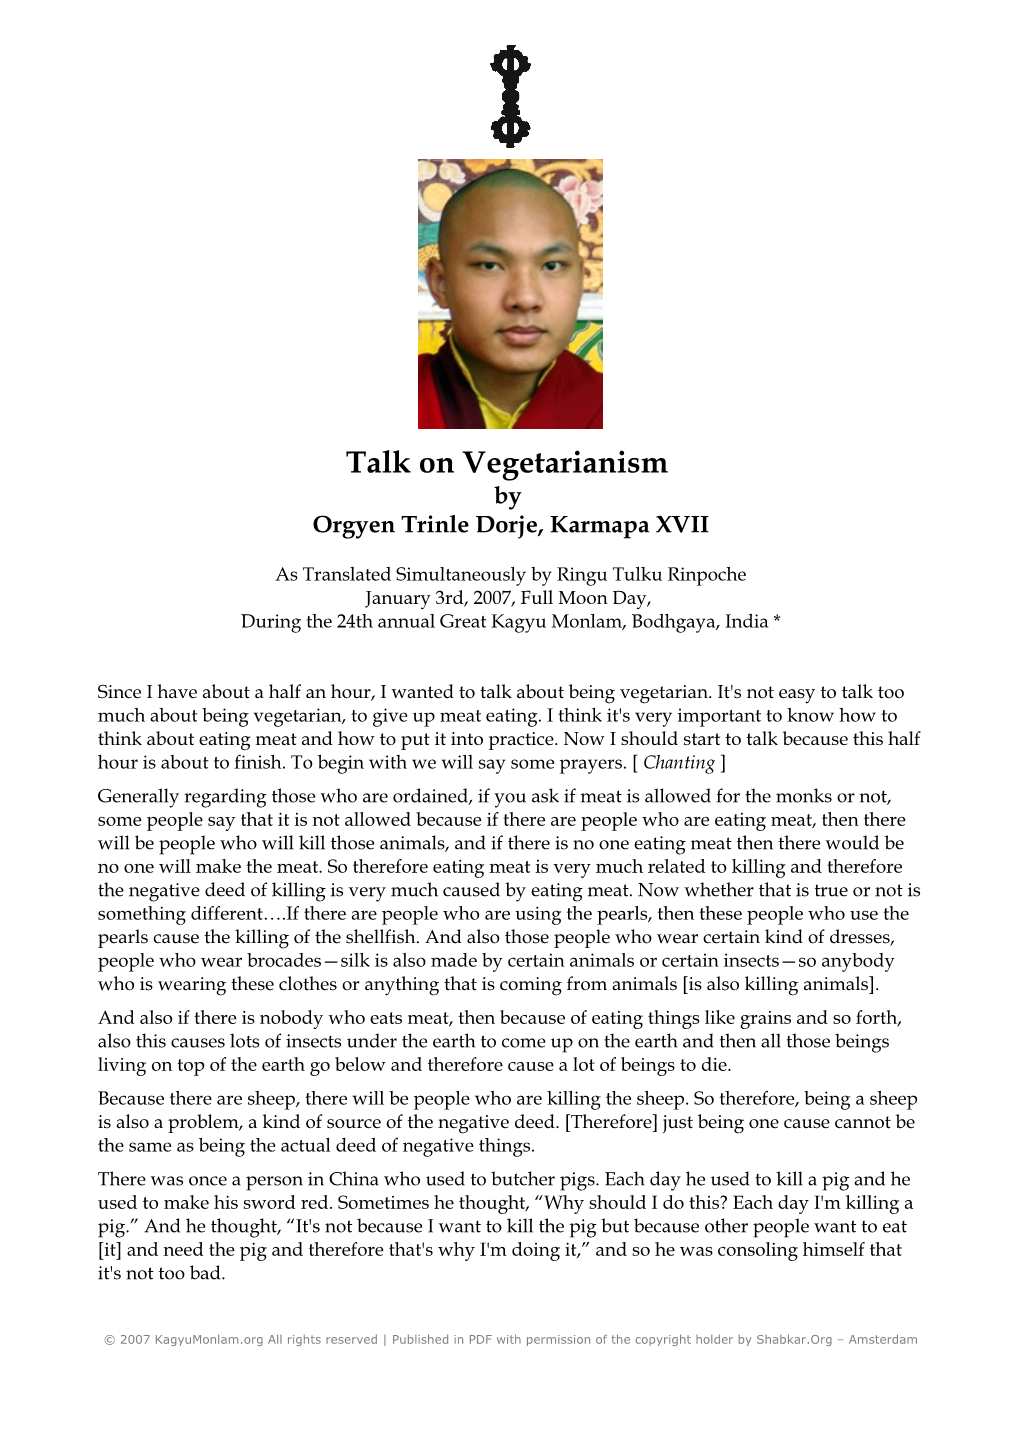 Talk on Vegetarianism by Orgyen Trinle Dorje, Karmapa XVII